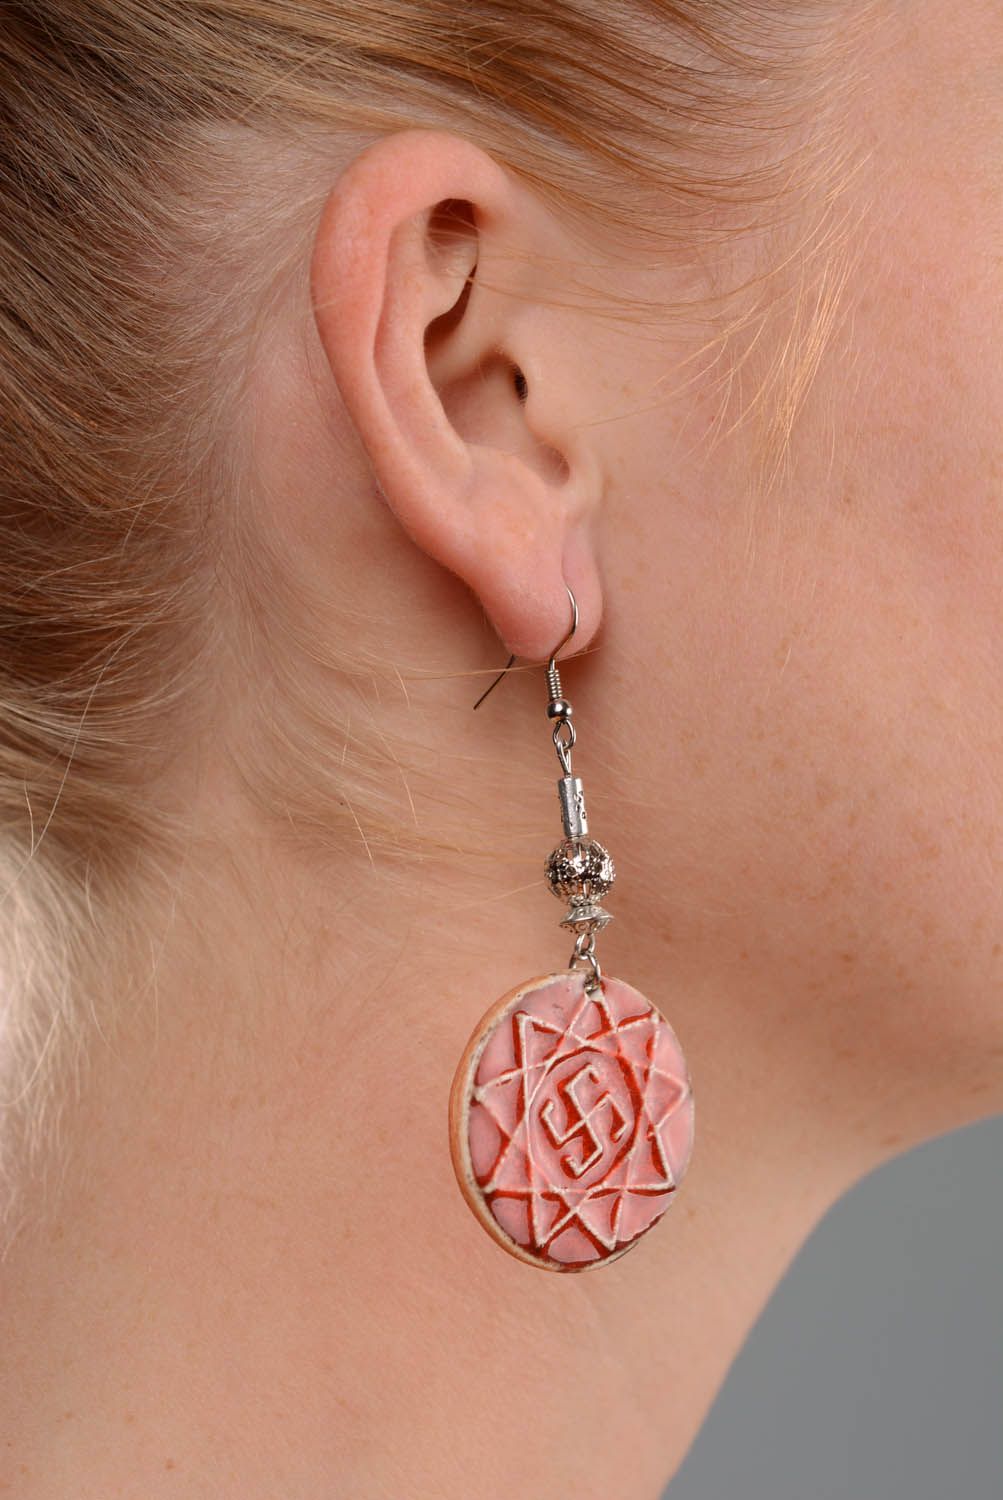 Ceramic earrings Oberezhnik photo 5